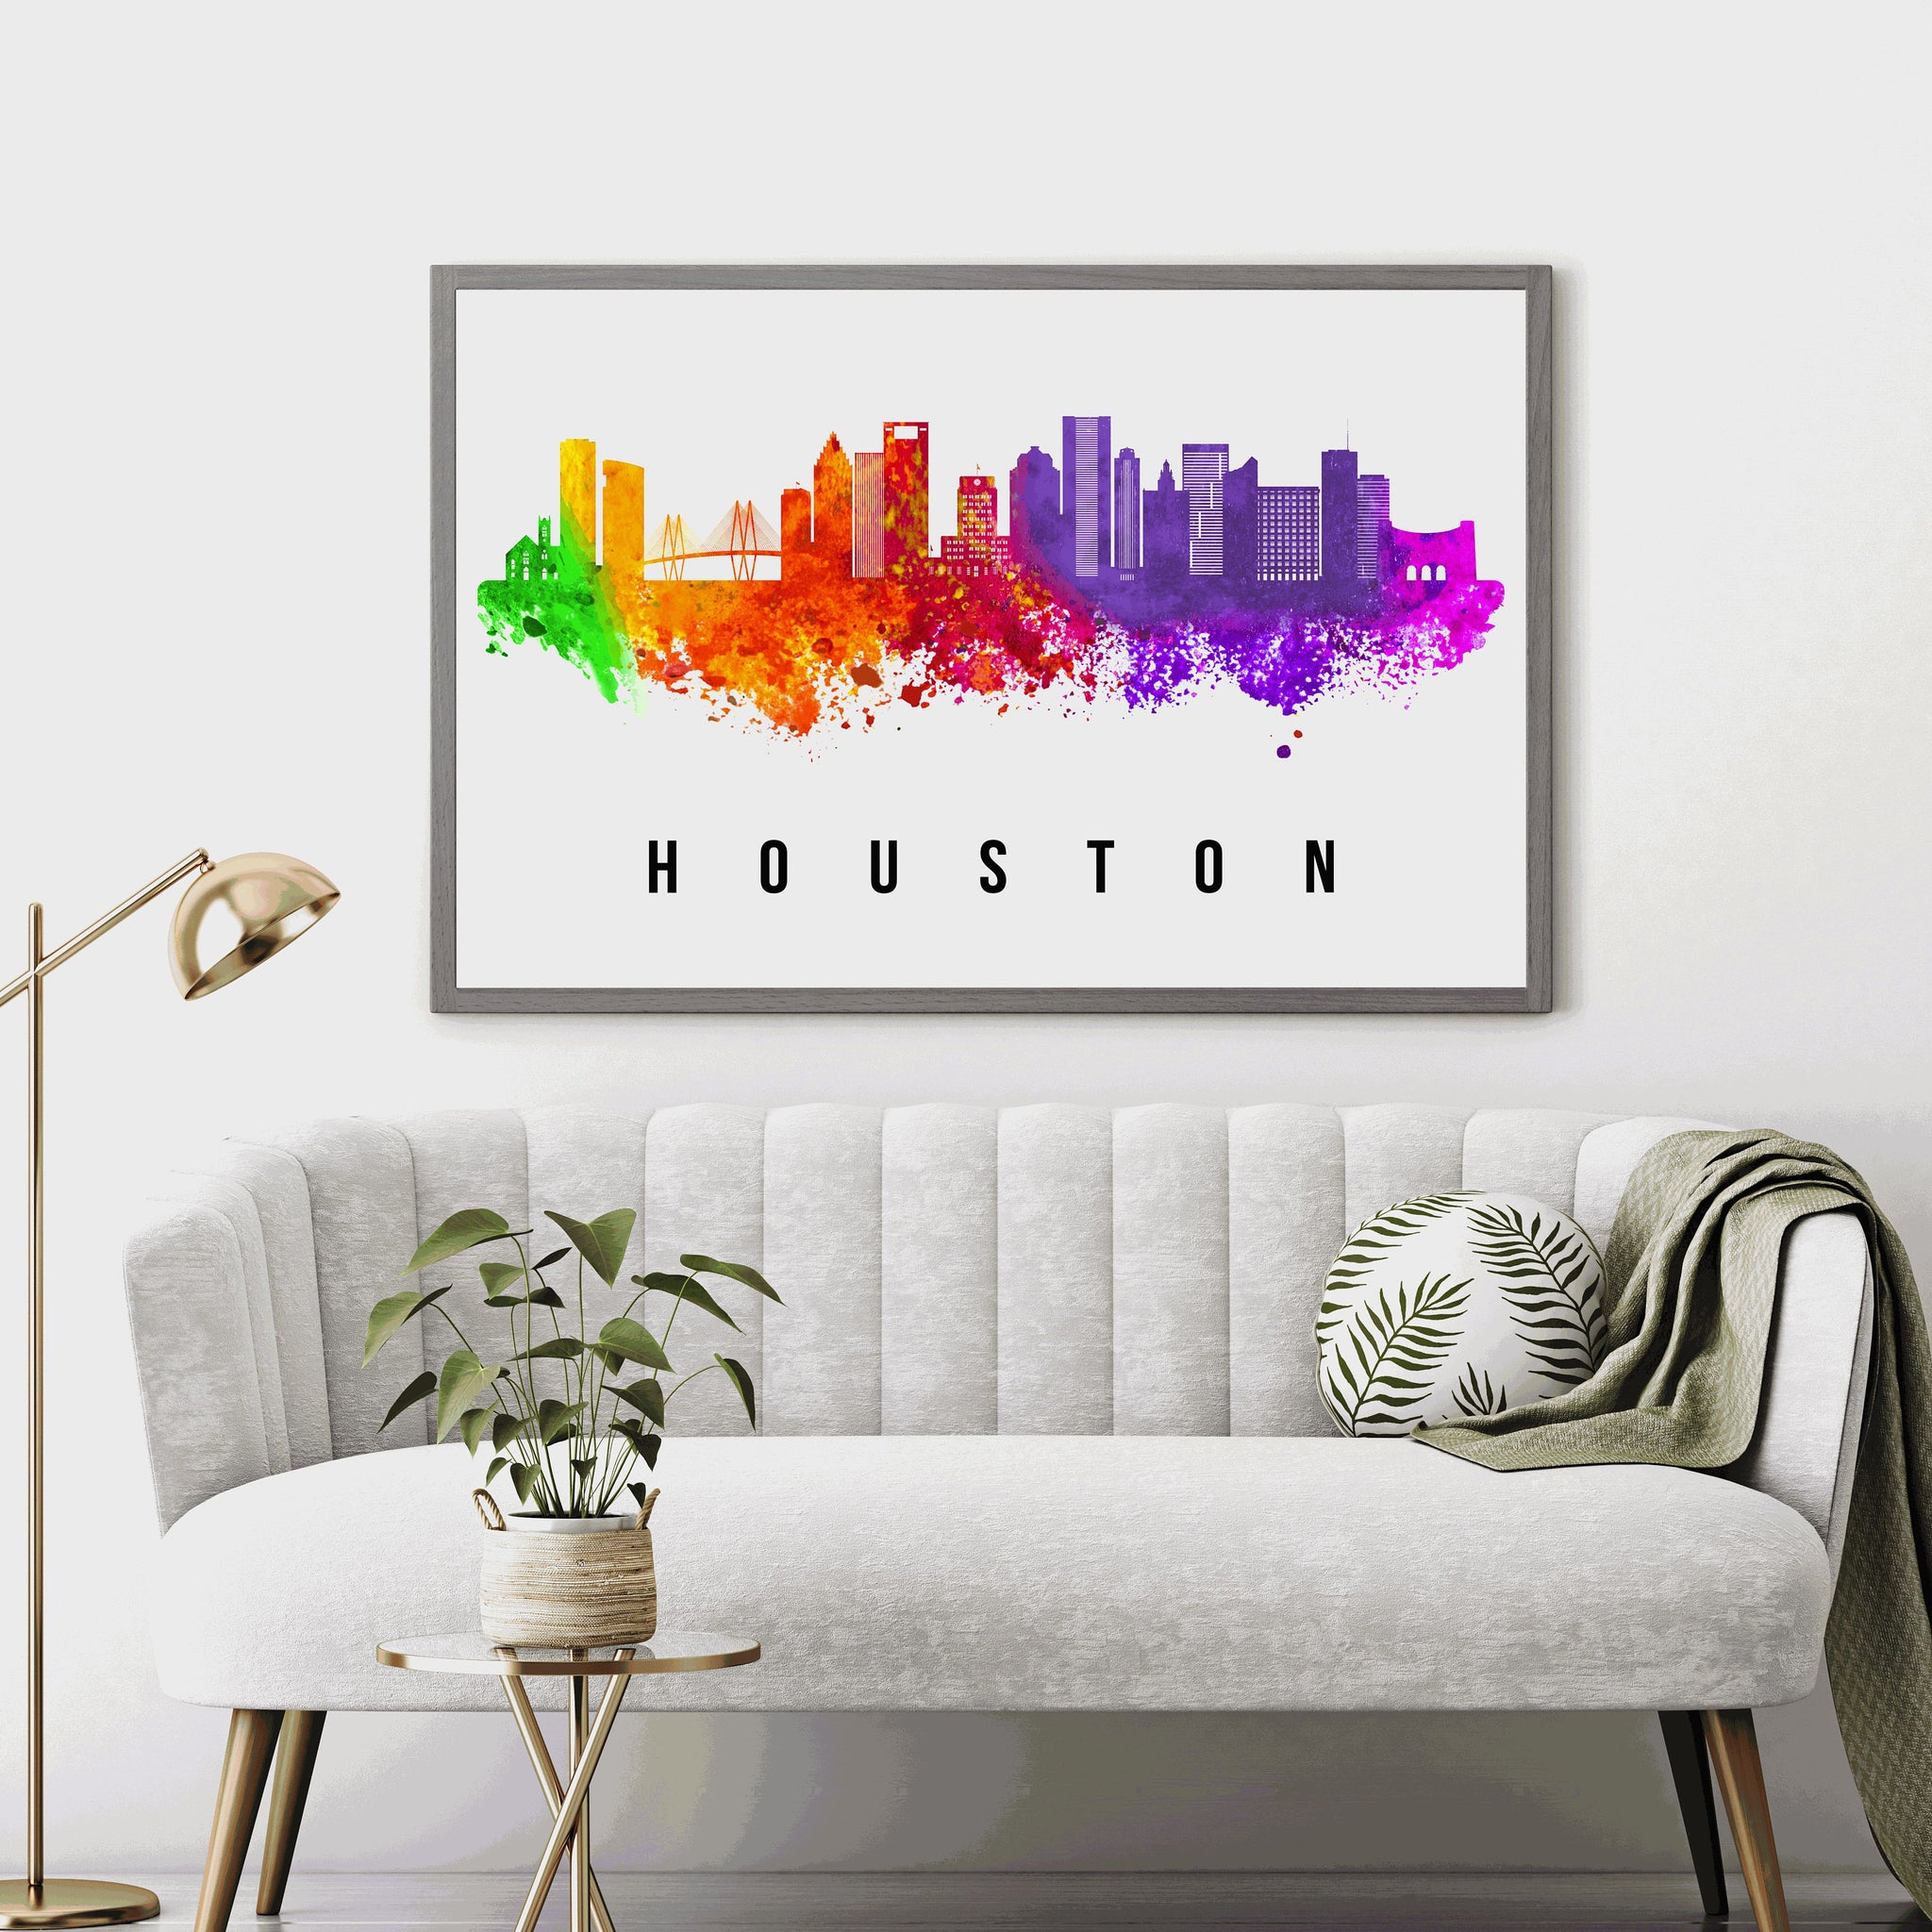 Houston - Texas Skyline Poster, Houston - Texas Cityscape Painting, Houston - Texas Landmark and Cityscape Print, Home and Office Wall Art